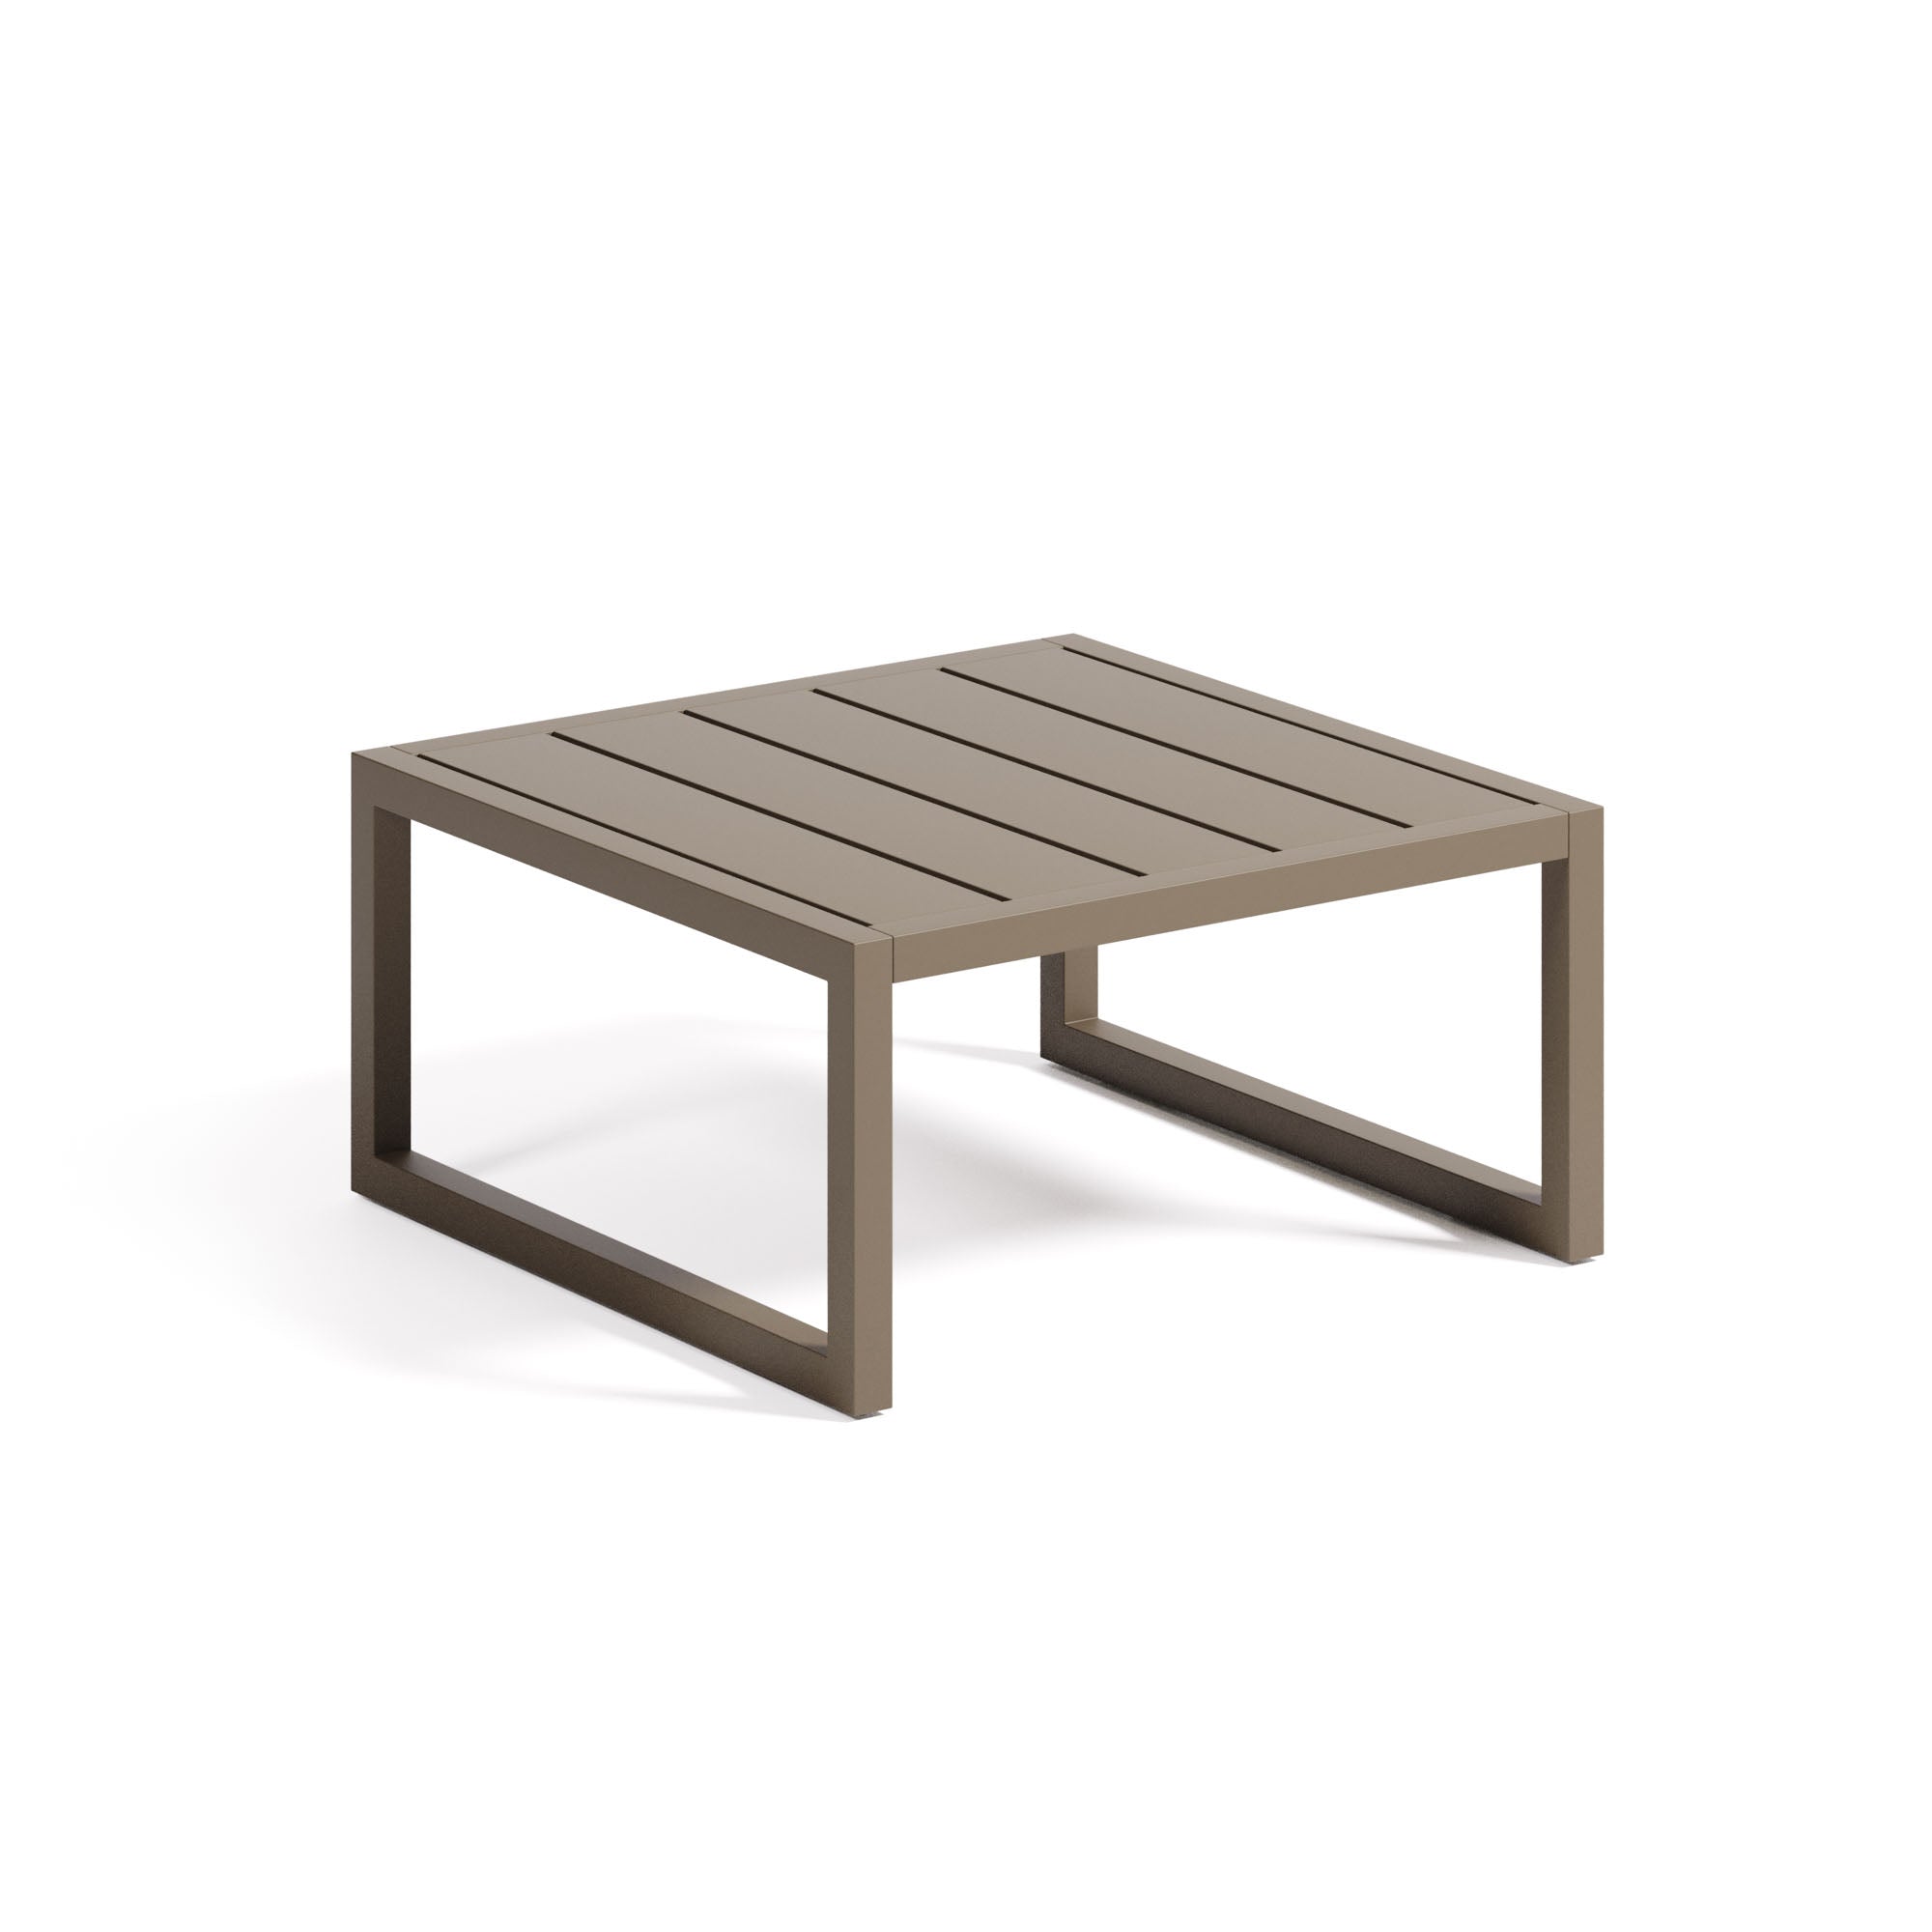 Comova 100% outdoor side table made from green aluminium, 60 x 60 cm